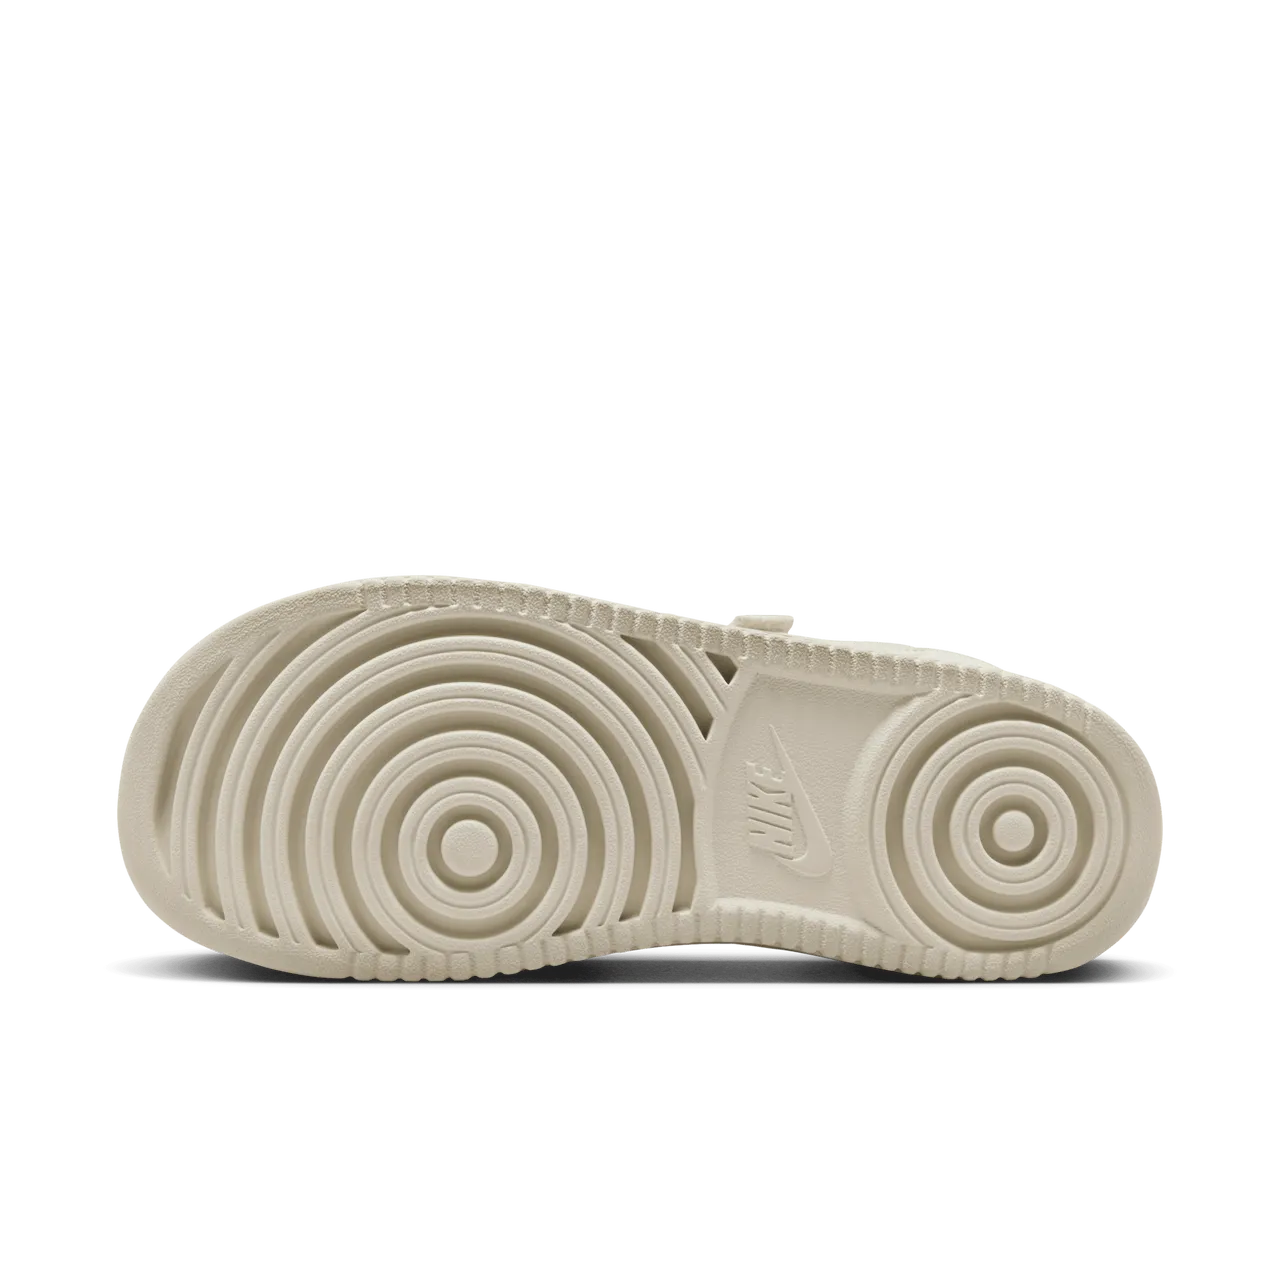 Nike Icon Classic SE sandalen voor dames - Groen